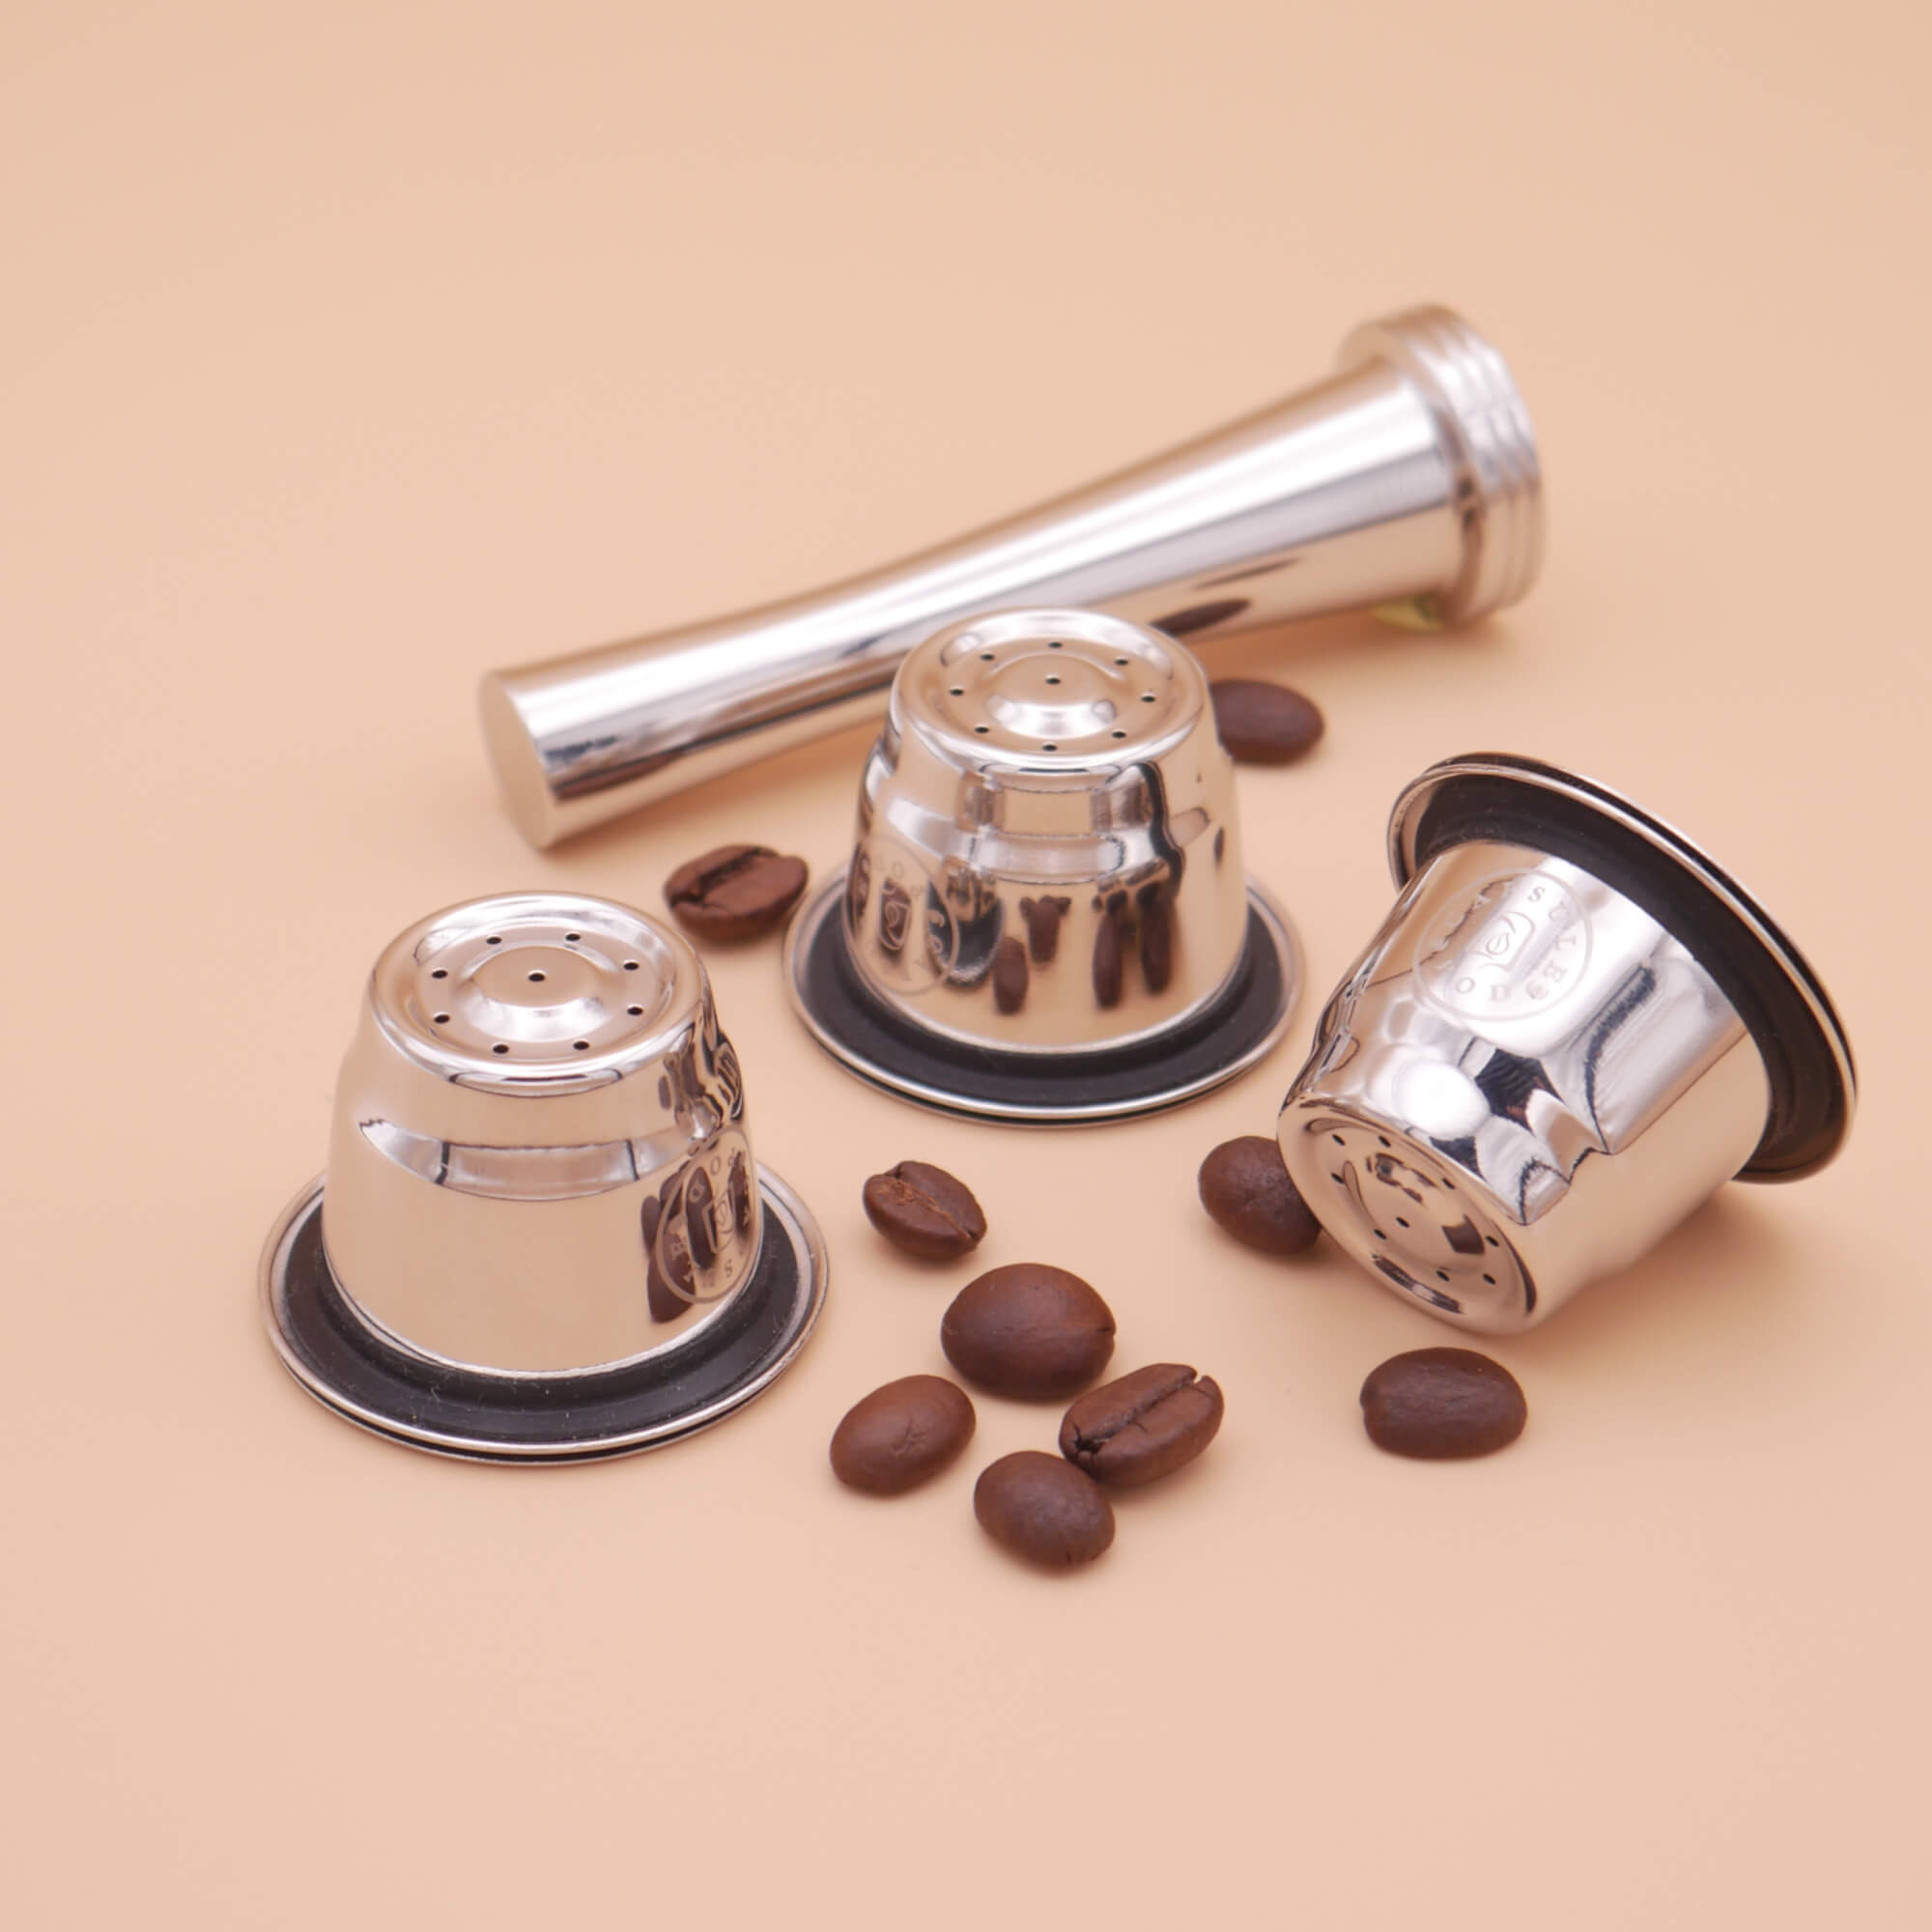 Les capsules Nespresso rechargeables : guide d'achat